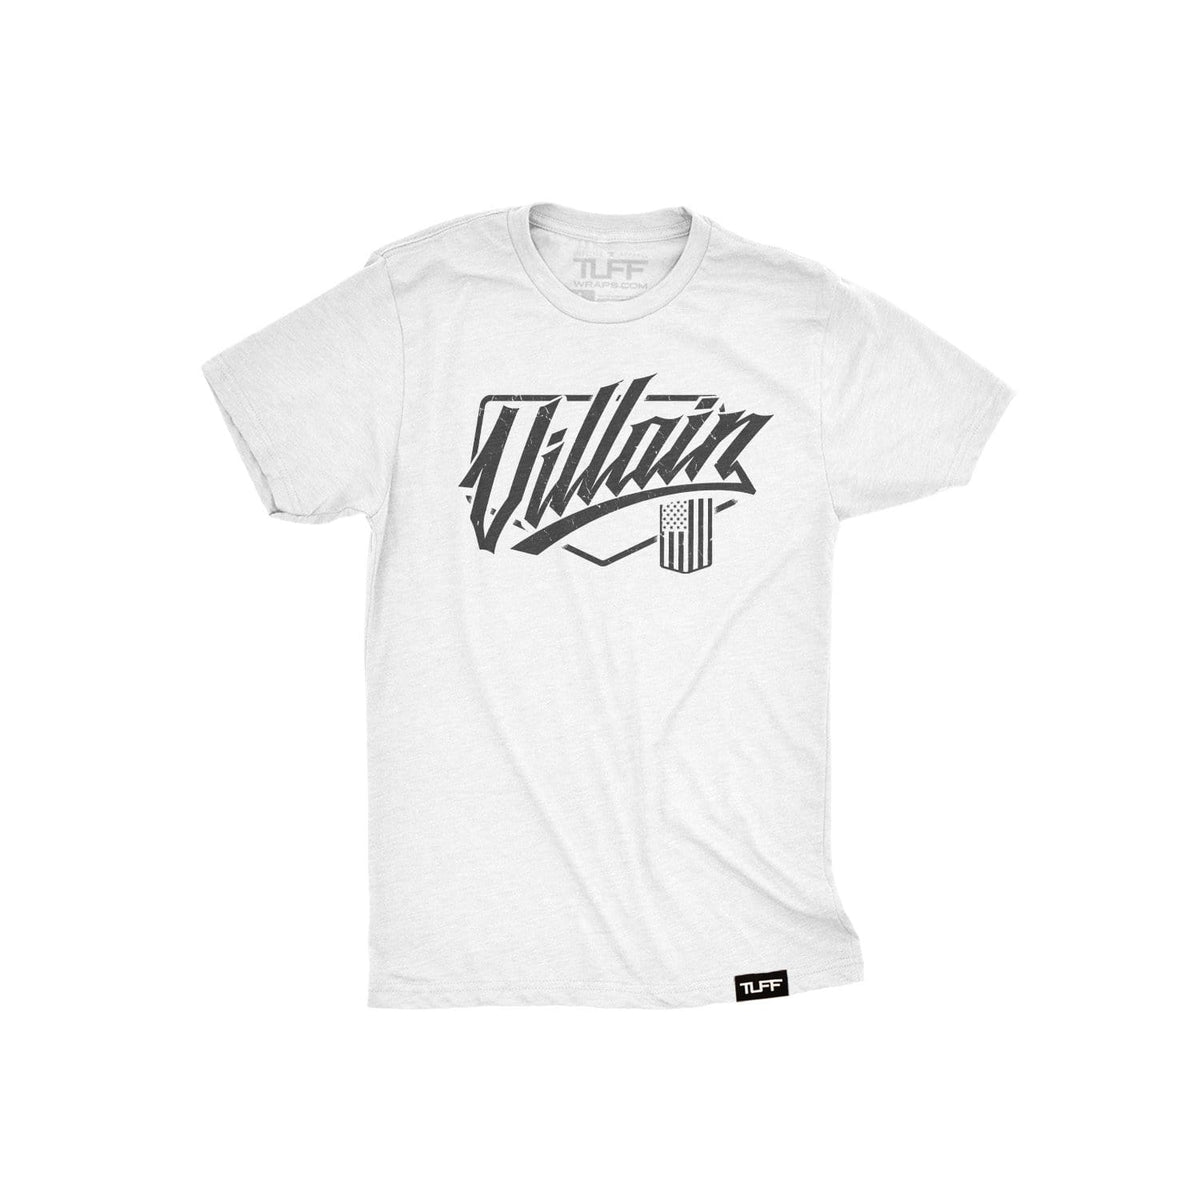 Villain Script Youth Tee Youth T-shirt